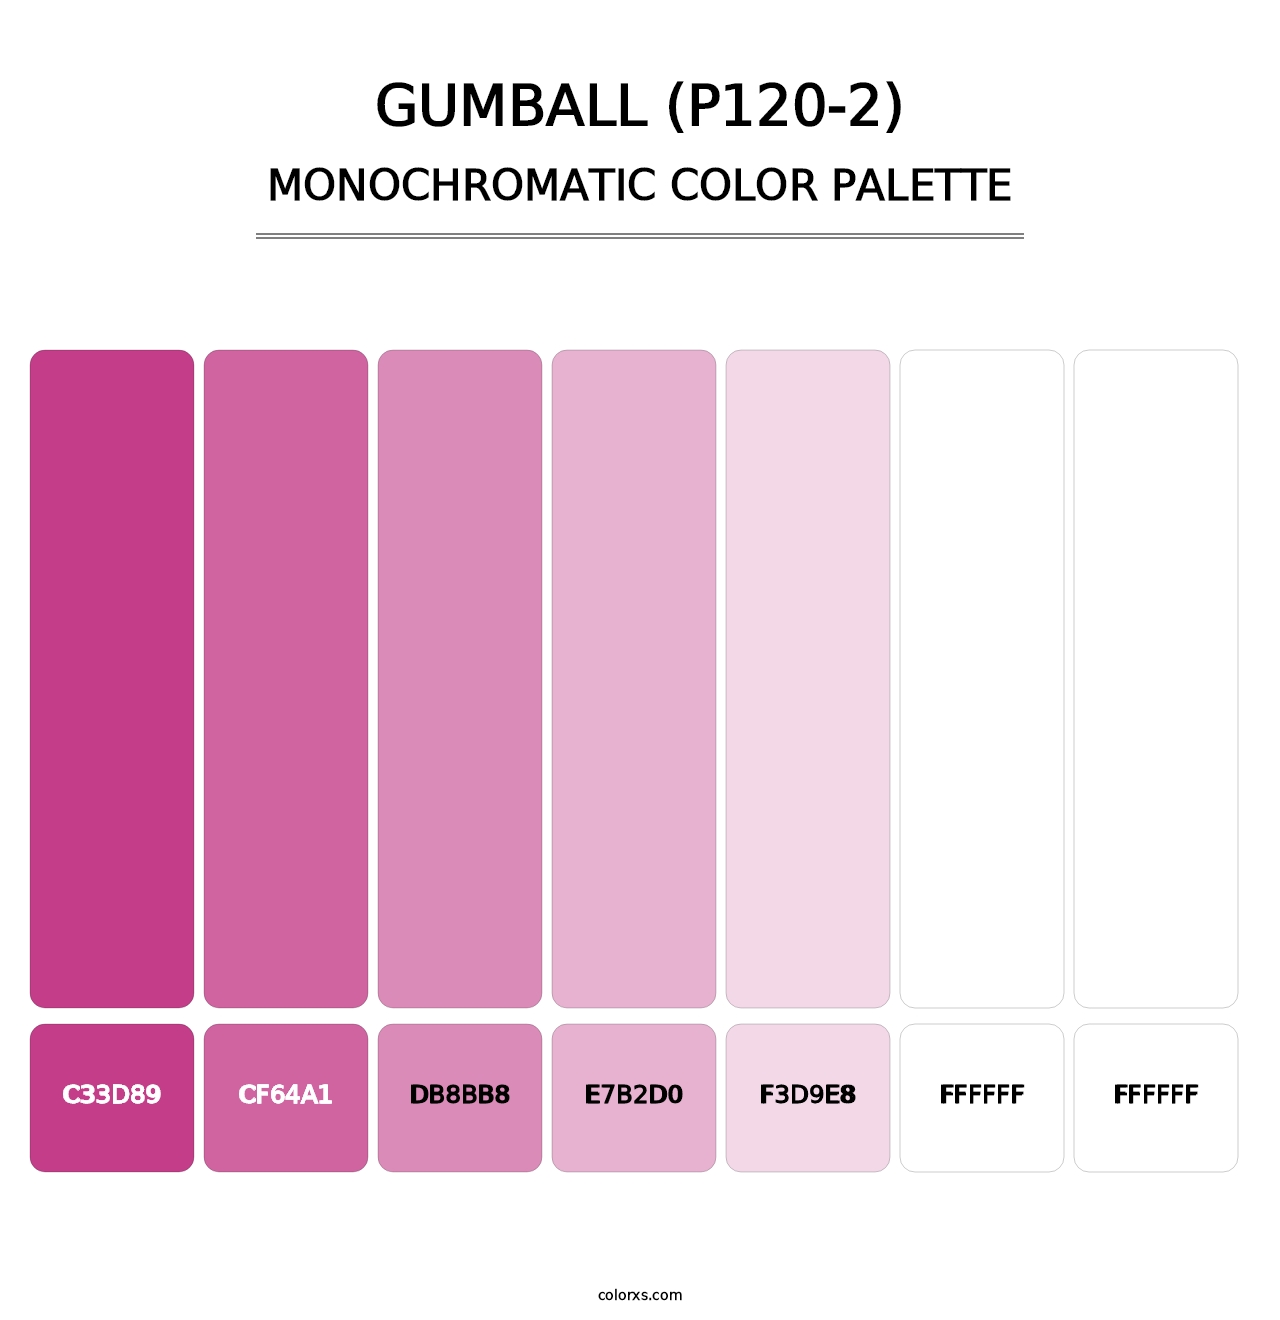 Gumball (P120-2) - Monochromatic Color Palette